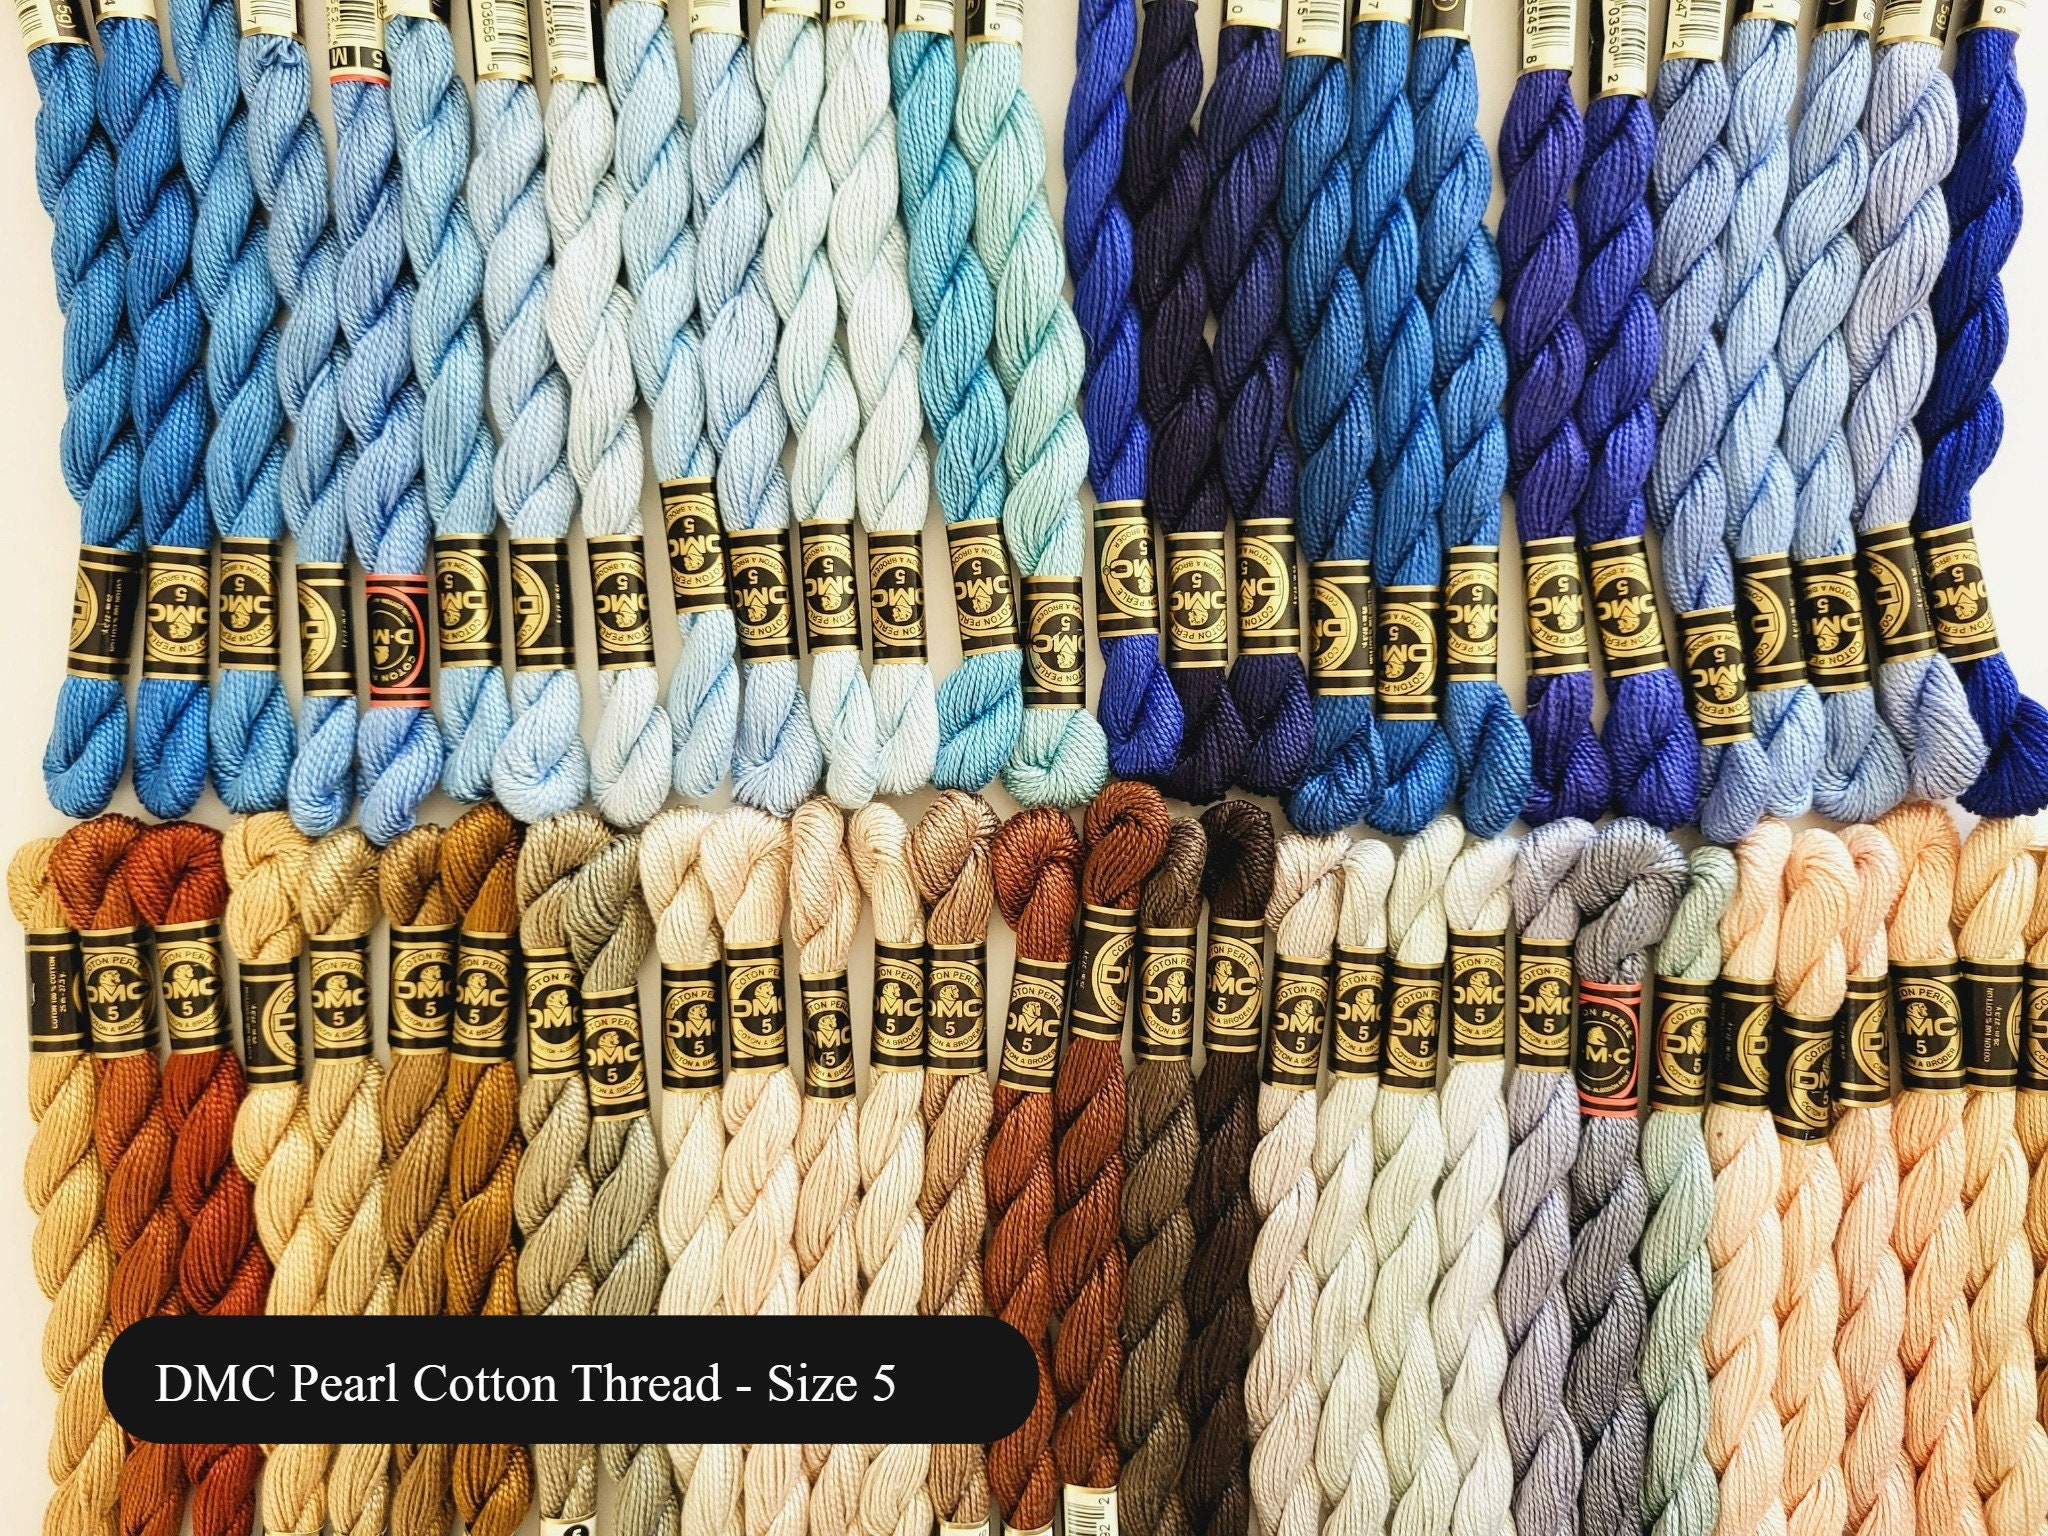 Perle (Pearl) Cotton Thread - Size 8 - Royal Blue - 75 Yard Spools